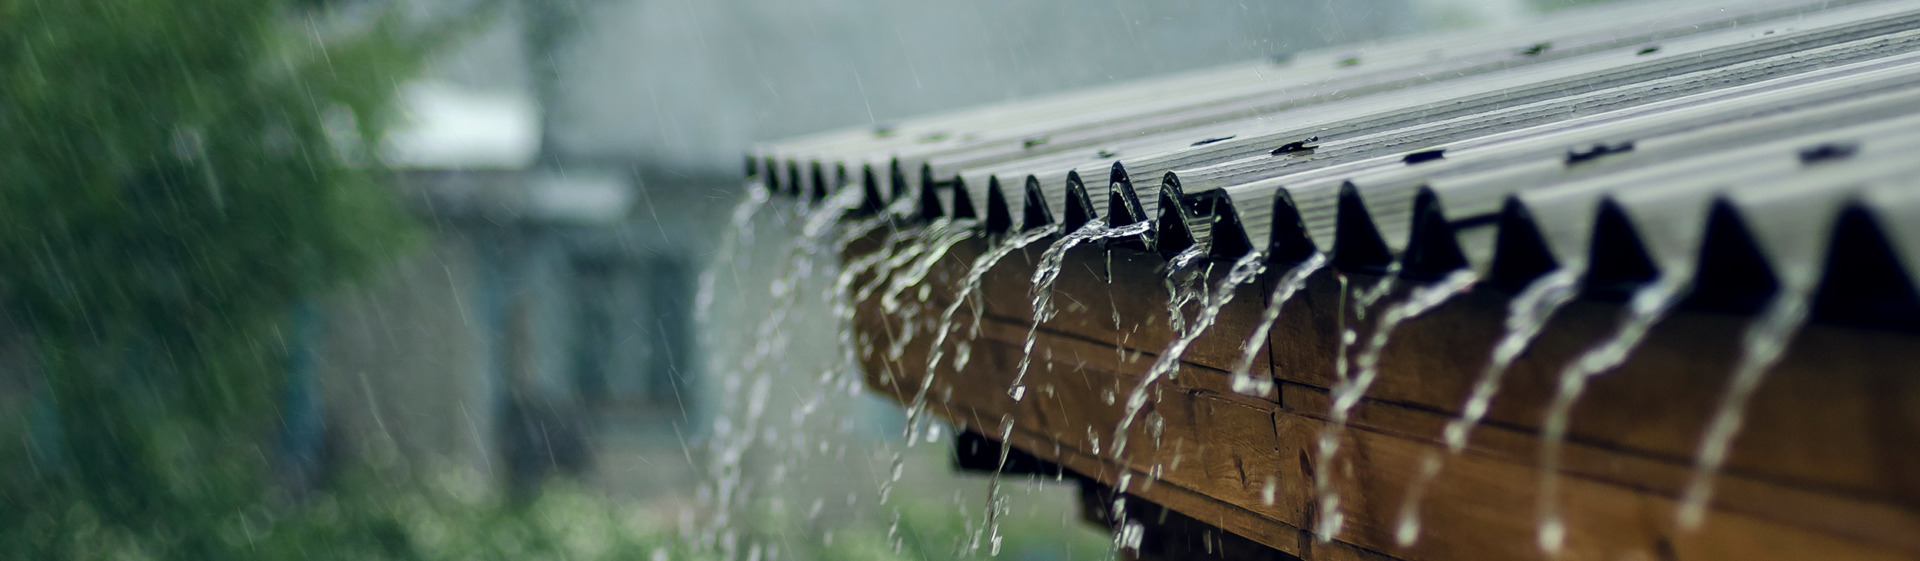 Corrugated Roof and Rain